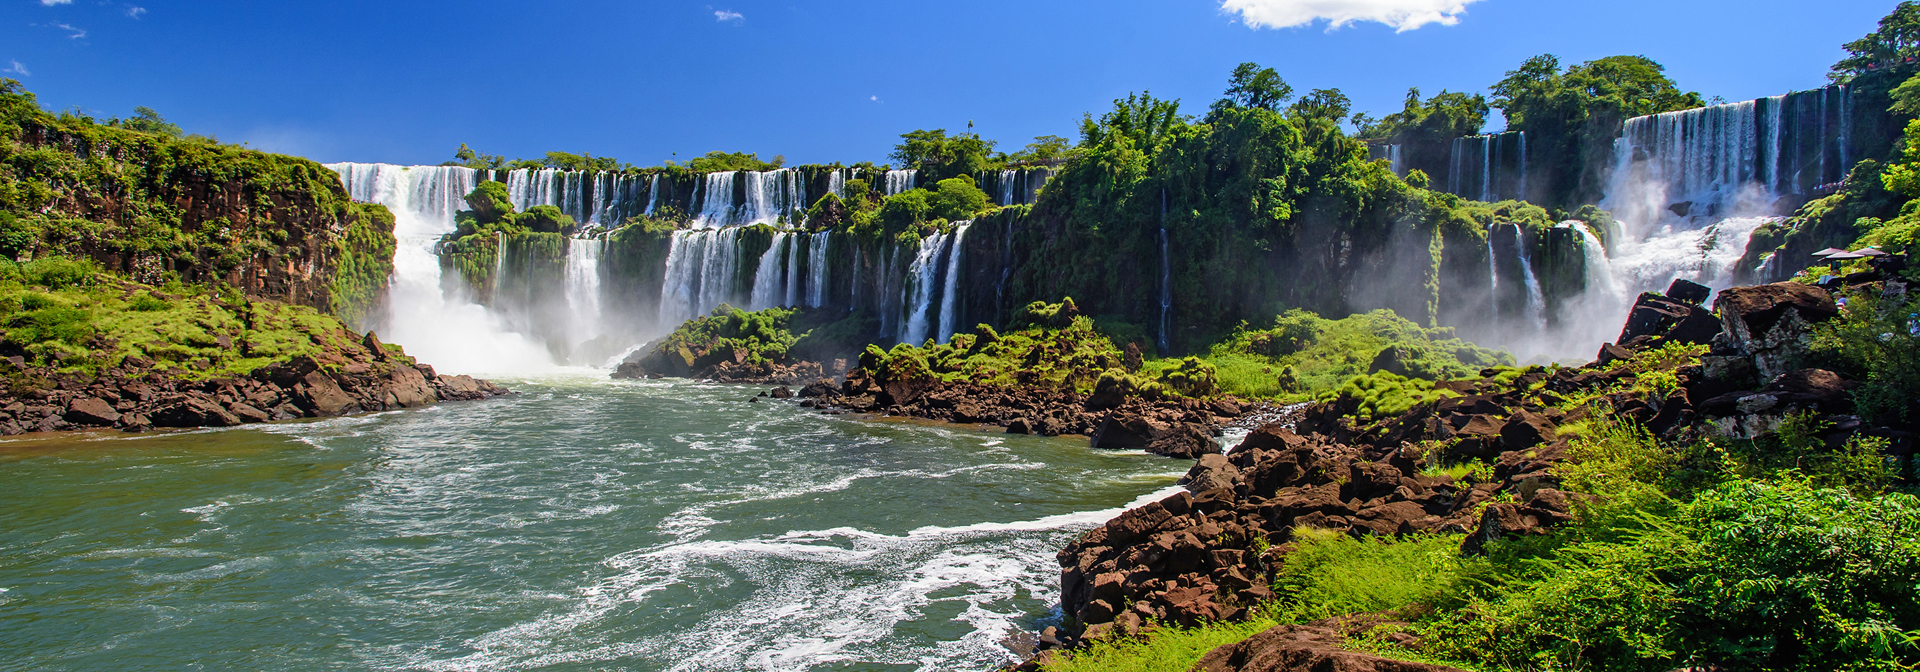 argentina - puerto iguazu_waterfall_03